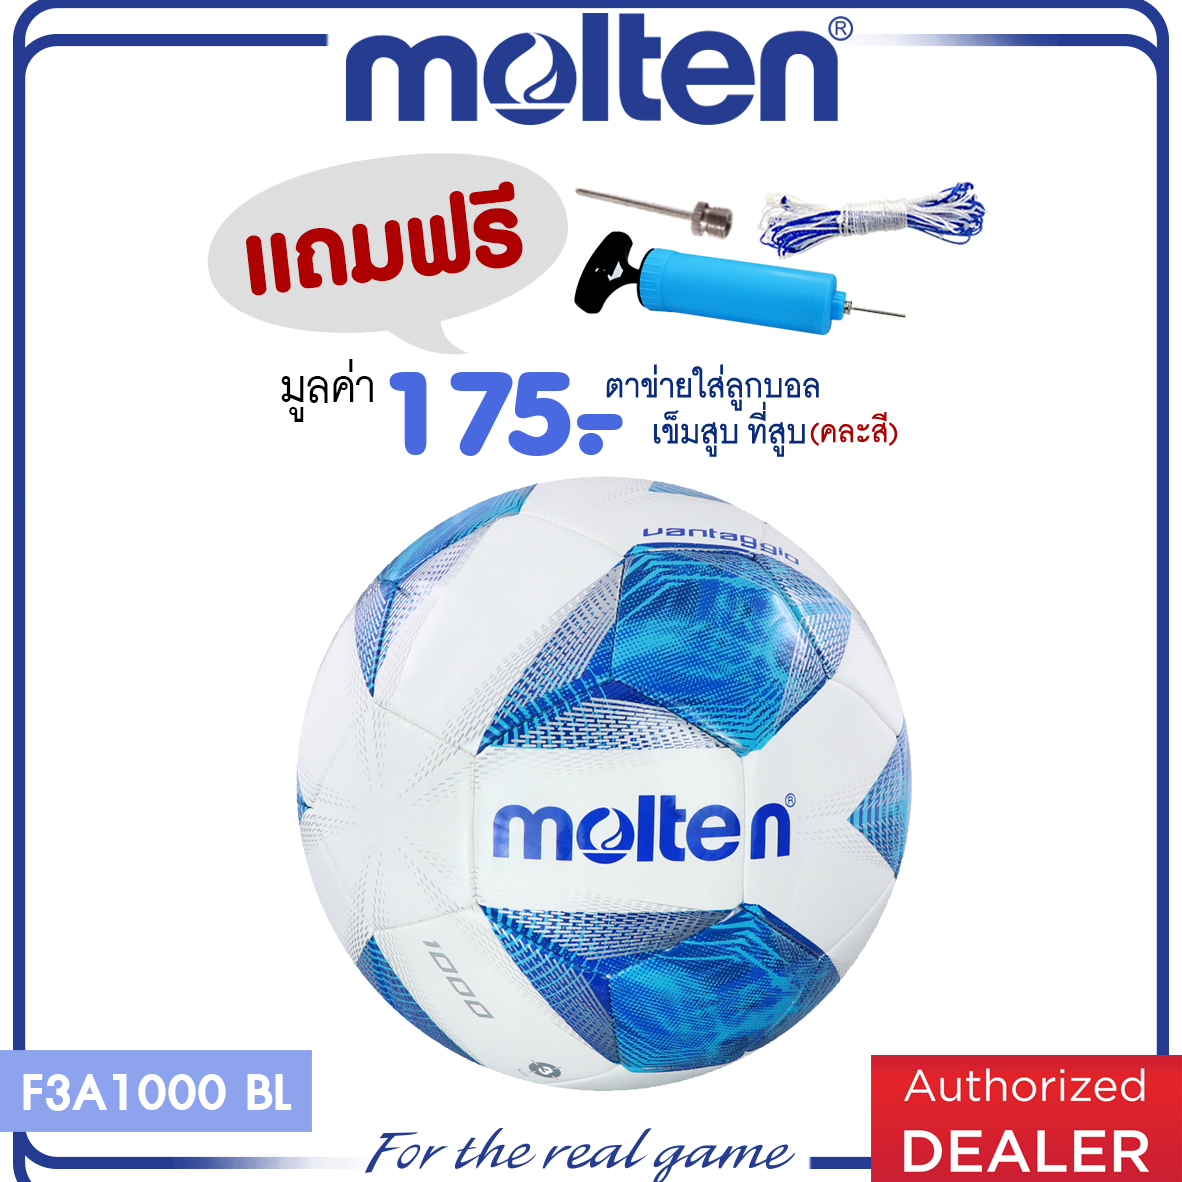 MOLTEN ลูกฟุตบอลหนังเย็บ MOLTEN Football MST TPU pk F3A1000 BL (420) เบอร์ 3 (แถมฟรี เข็มสูบ + ตาข่าย+ ที่สูบมือ)